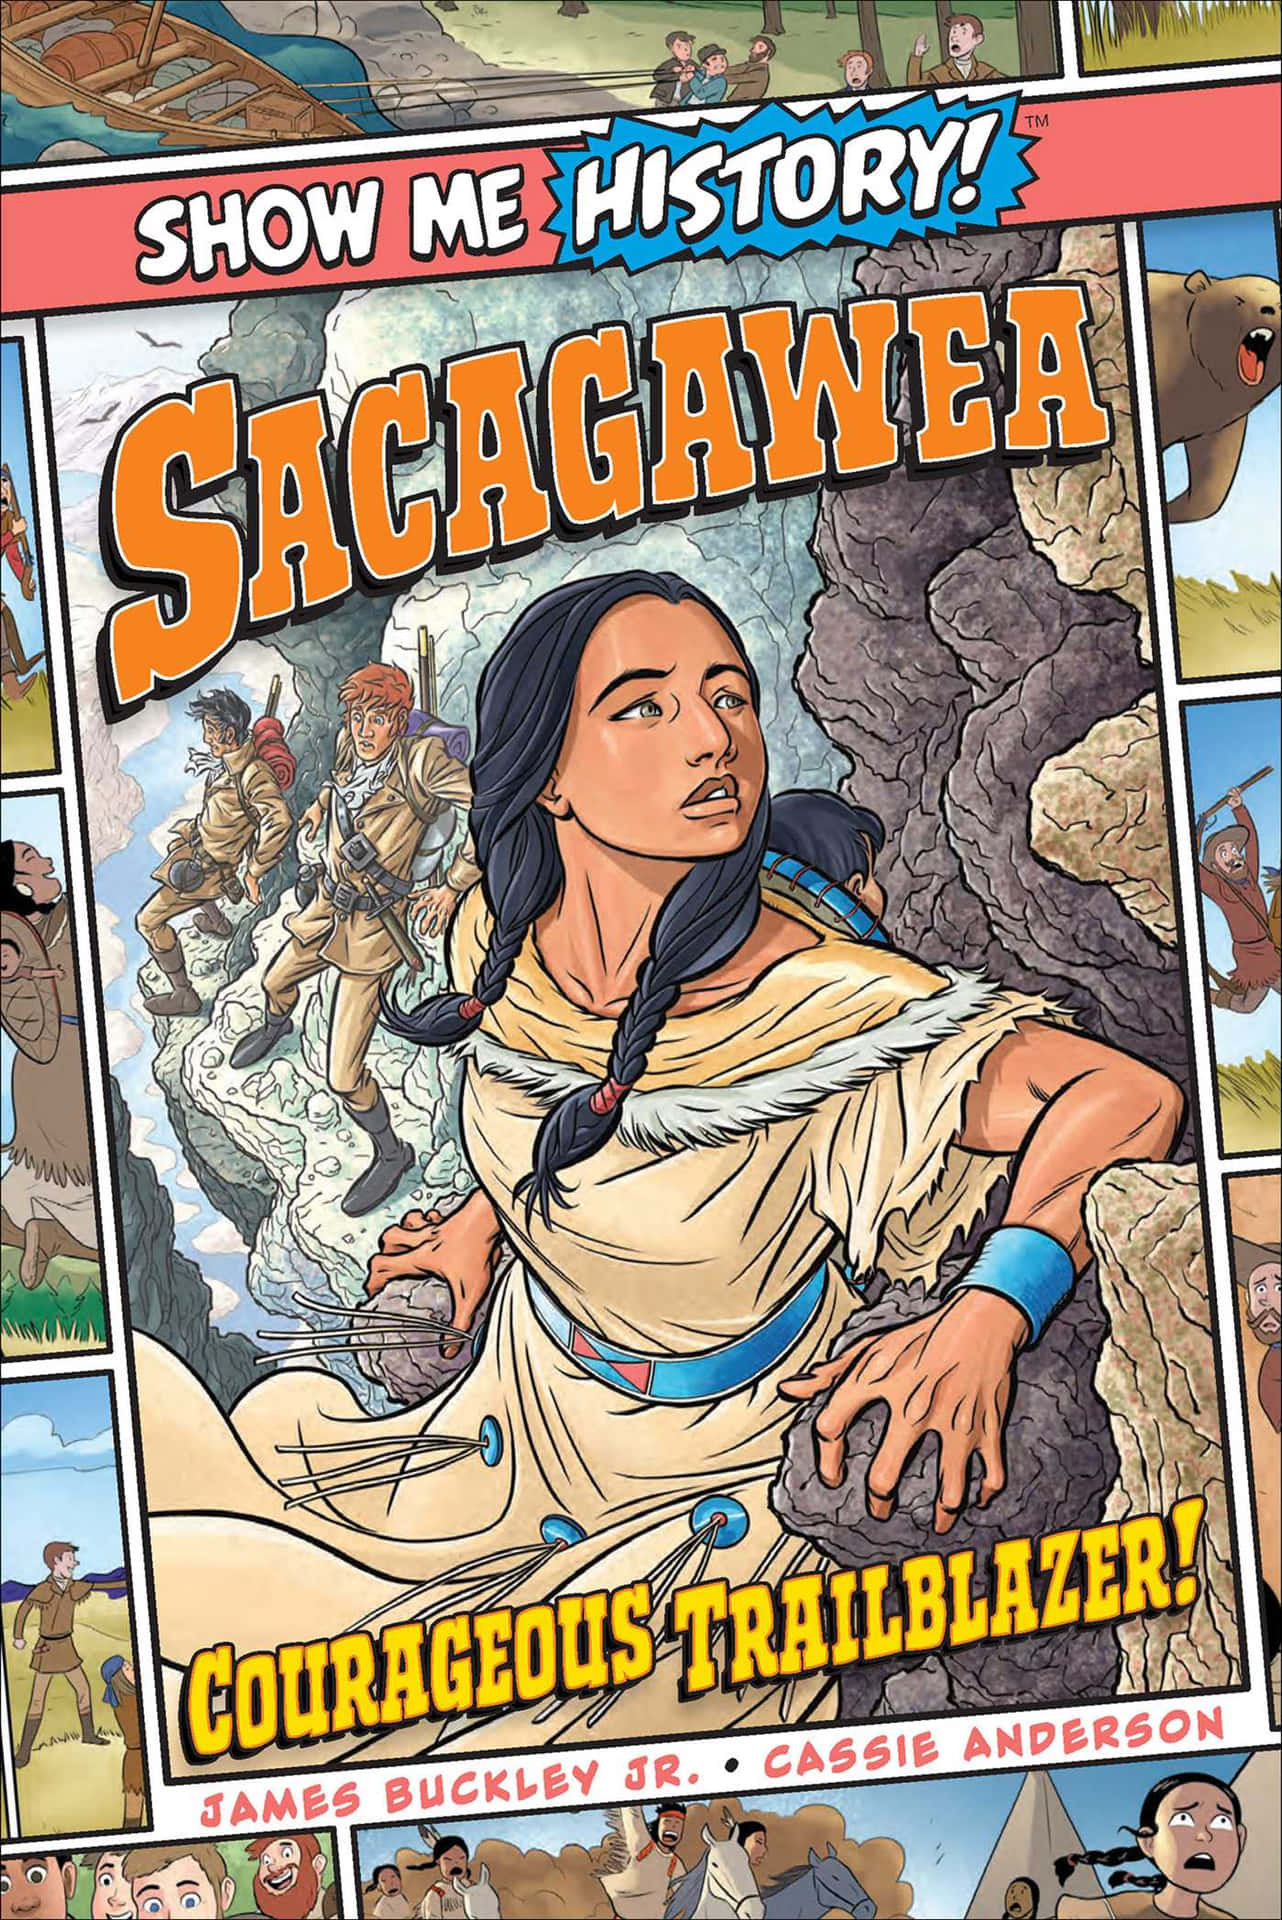 Visamig Historiens Sagagawer - En Bok Med Illustrationer.